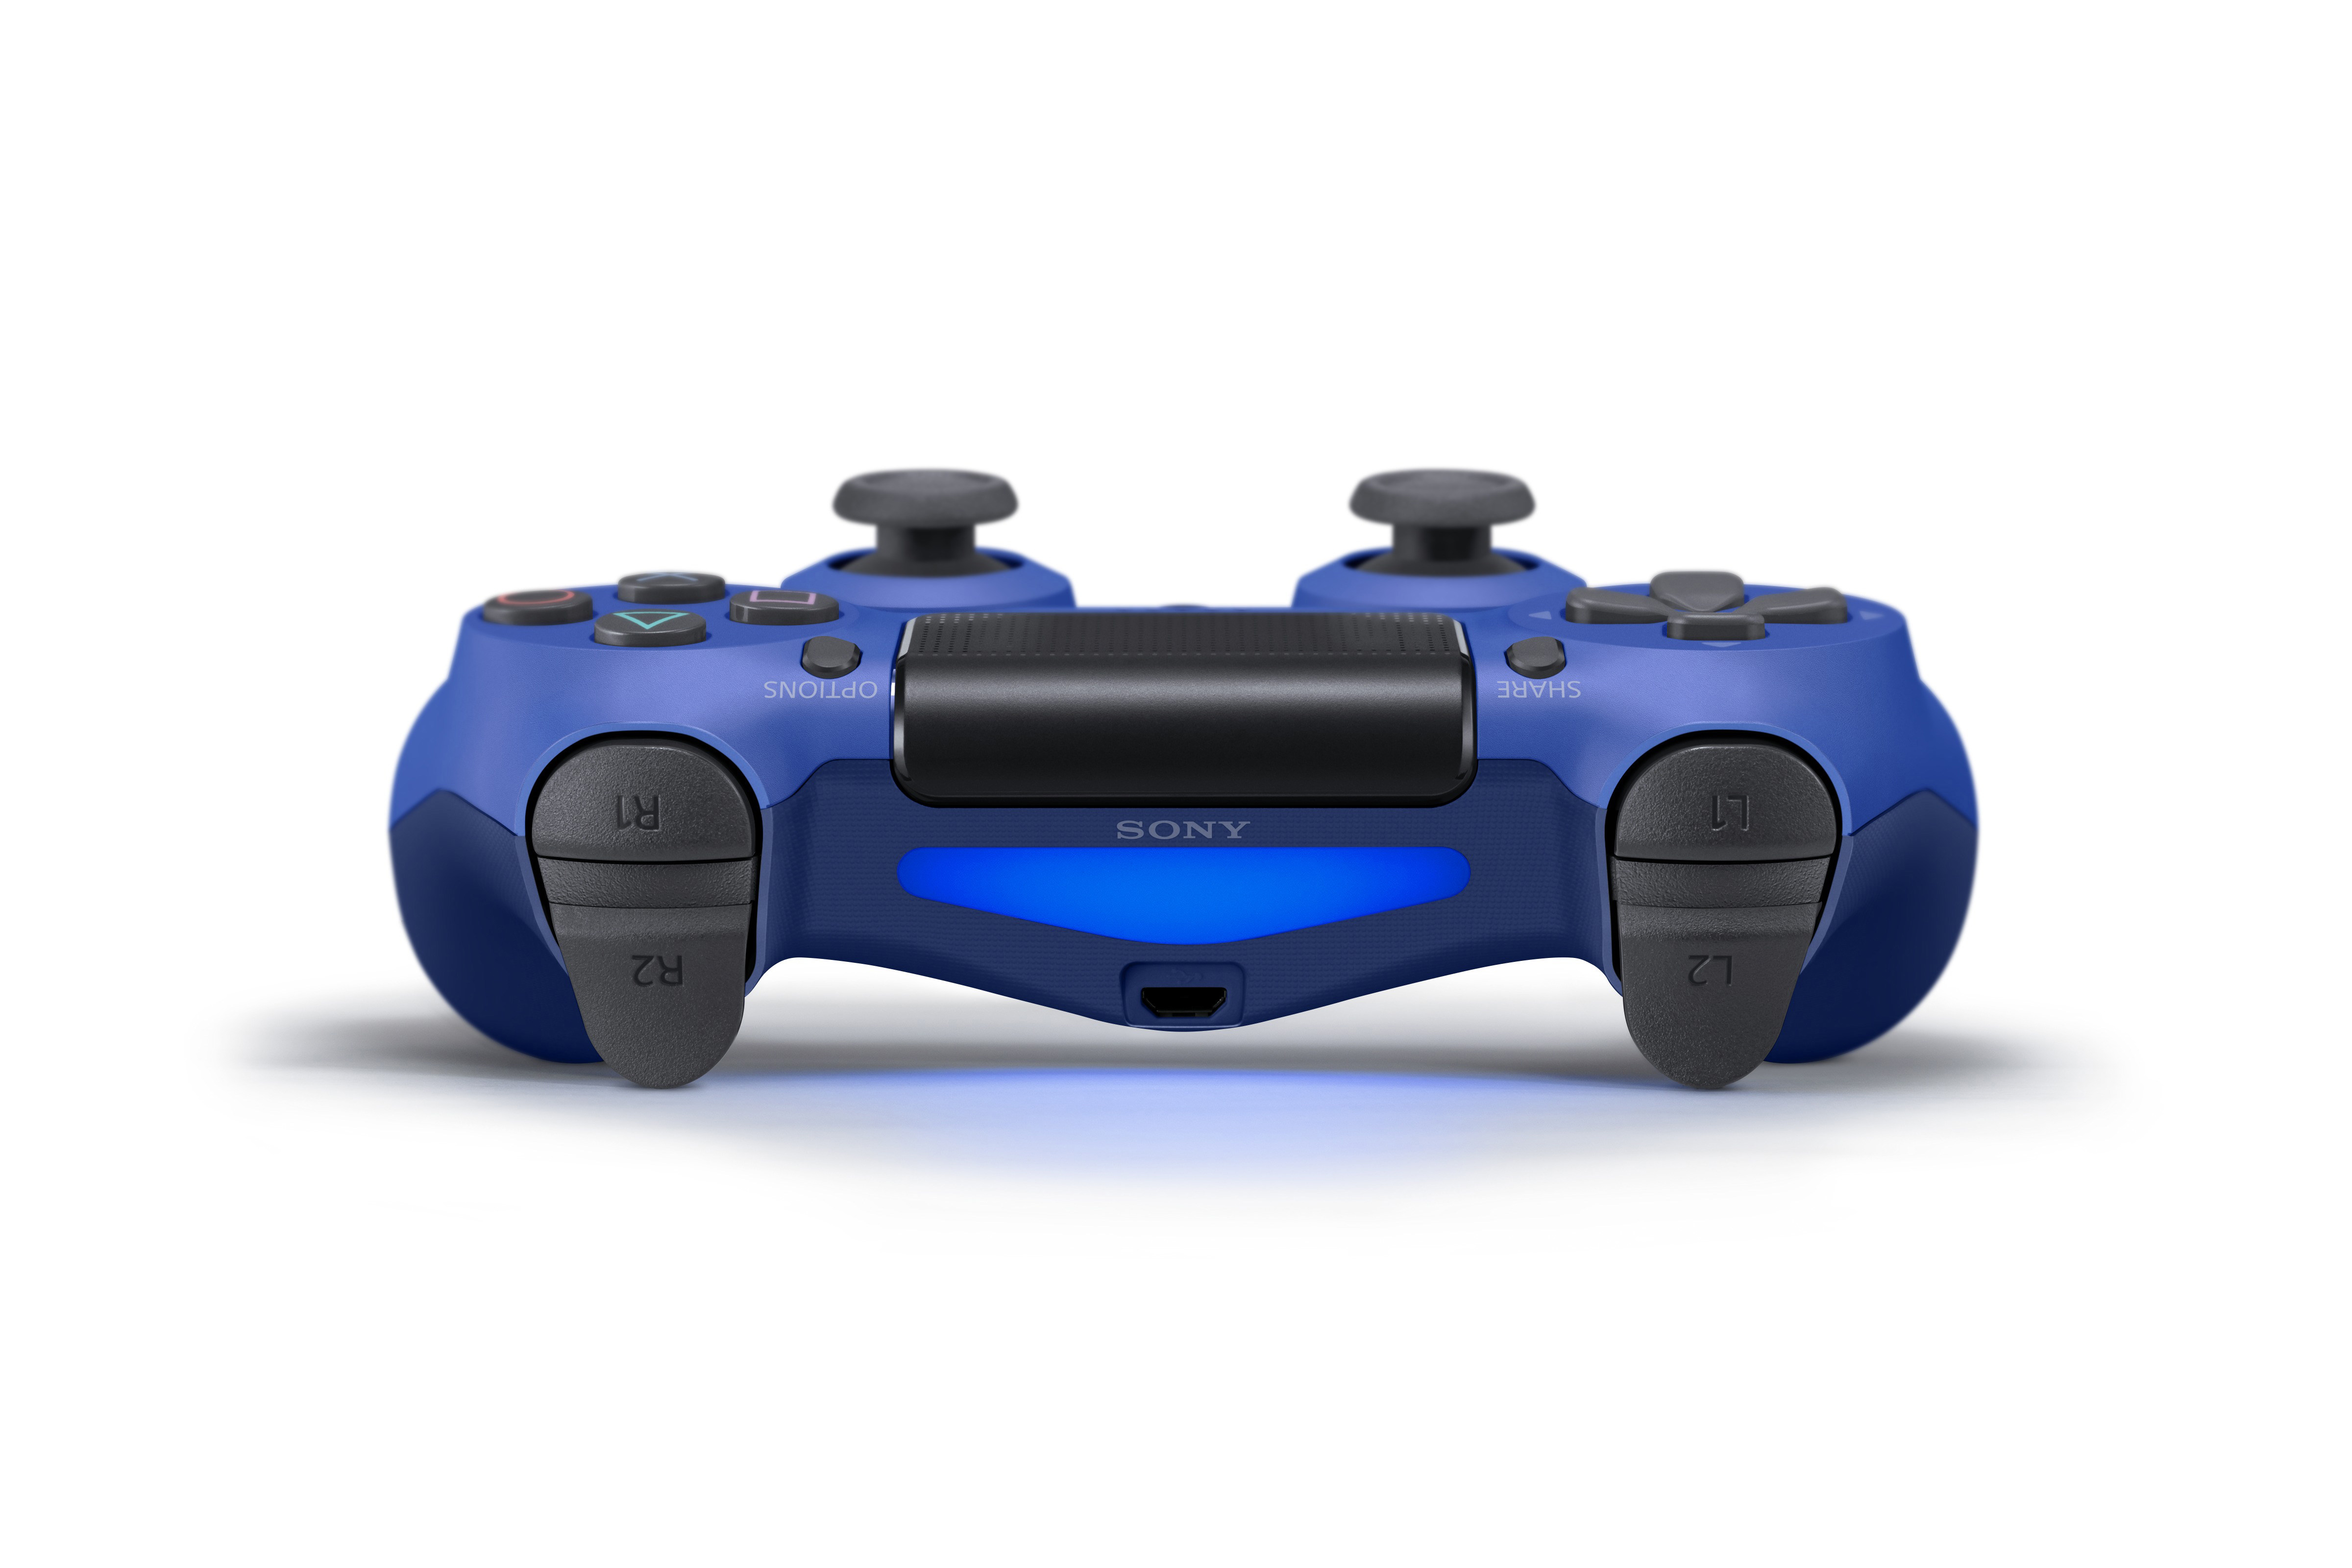 SONY 4 PlayStation Blue PlayStation Controller Wireless 4 für Redesigned 4 Wave Dualshock